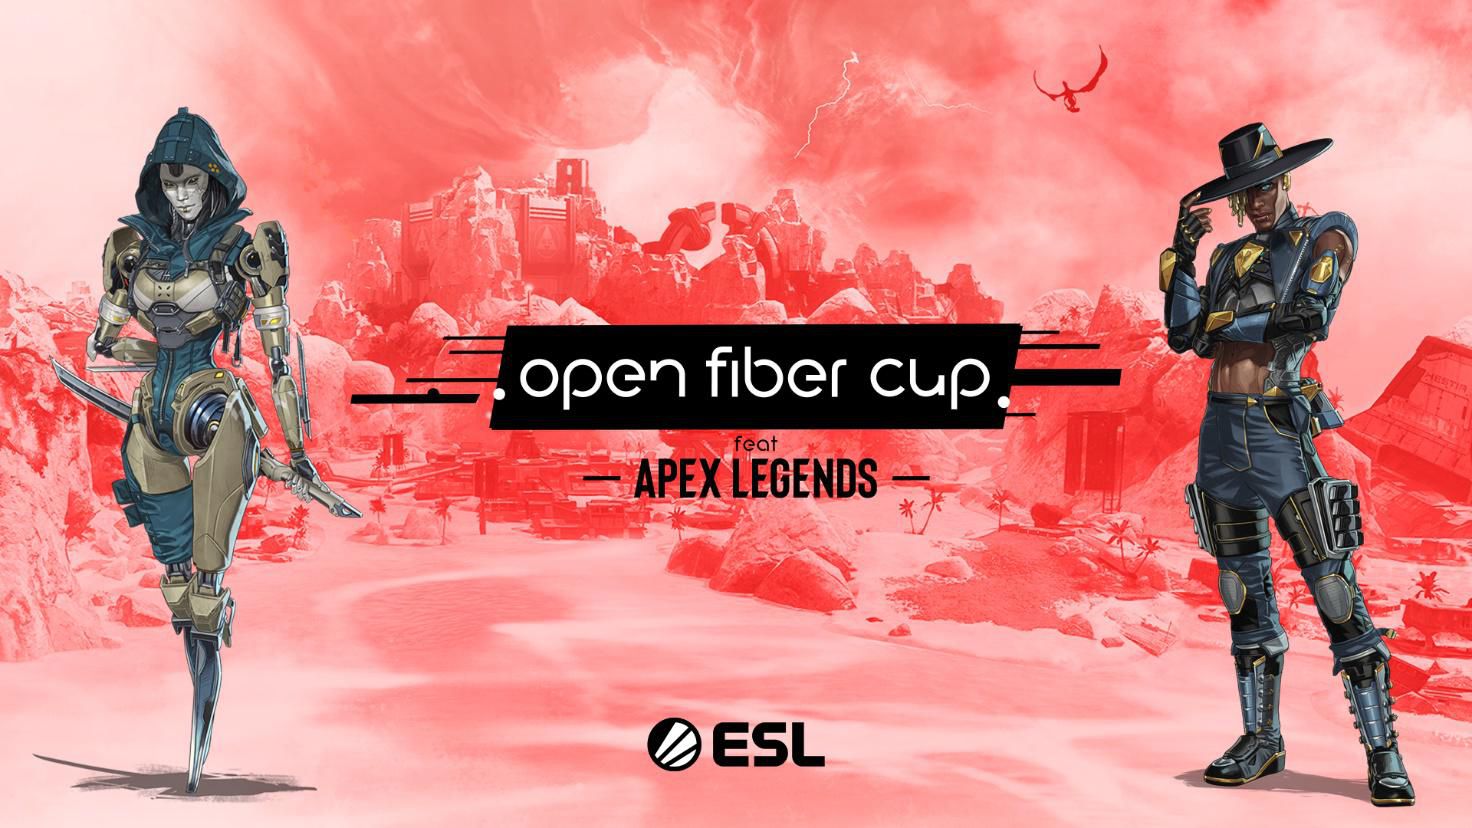 stagione open fiber cup apex legends